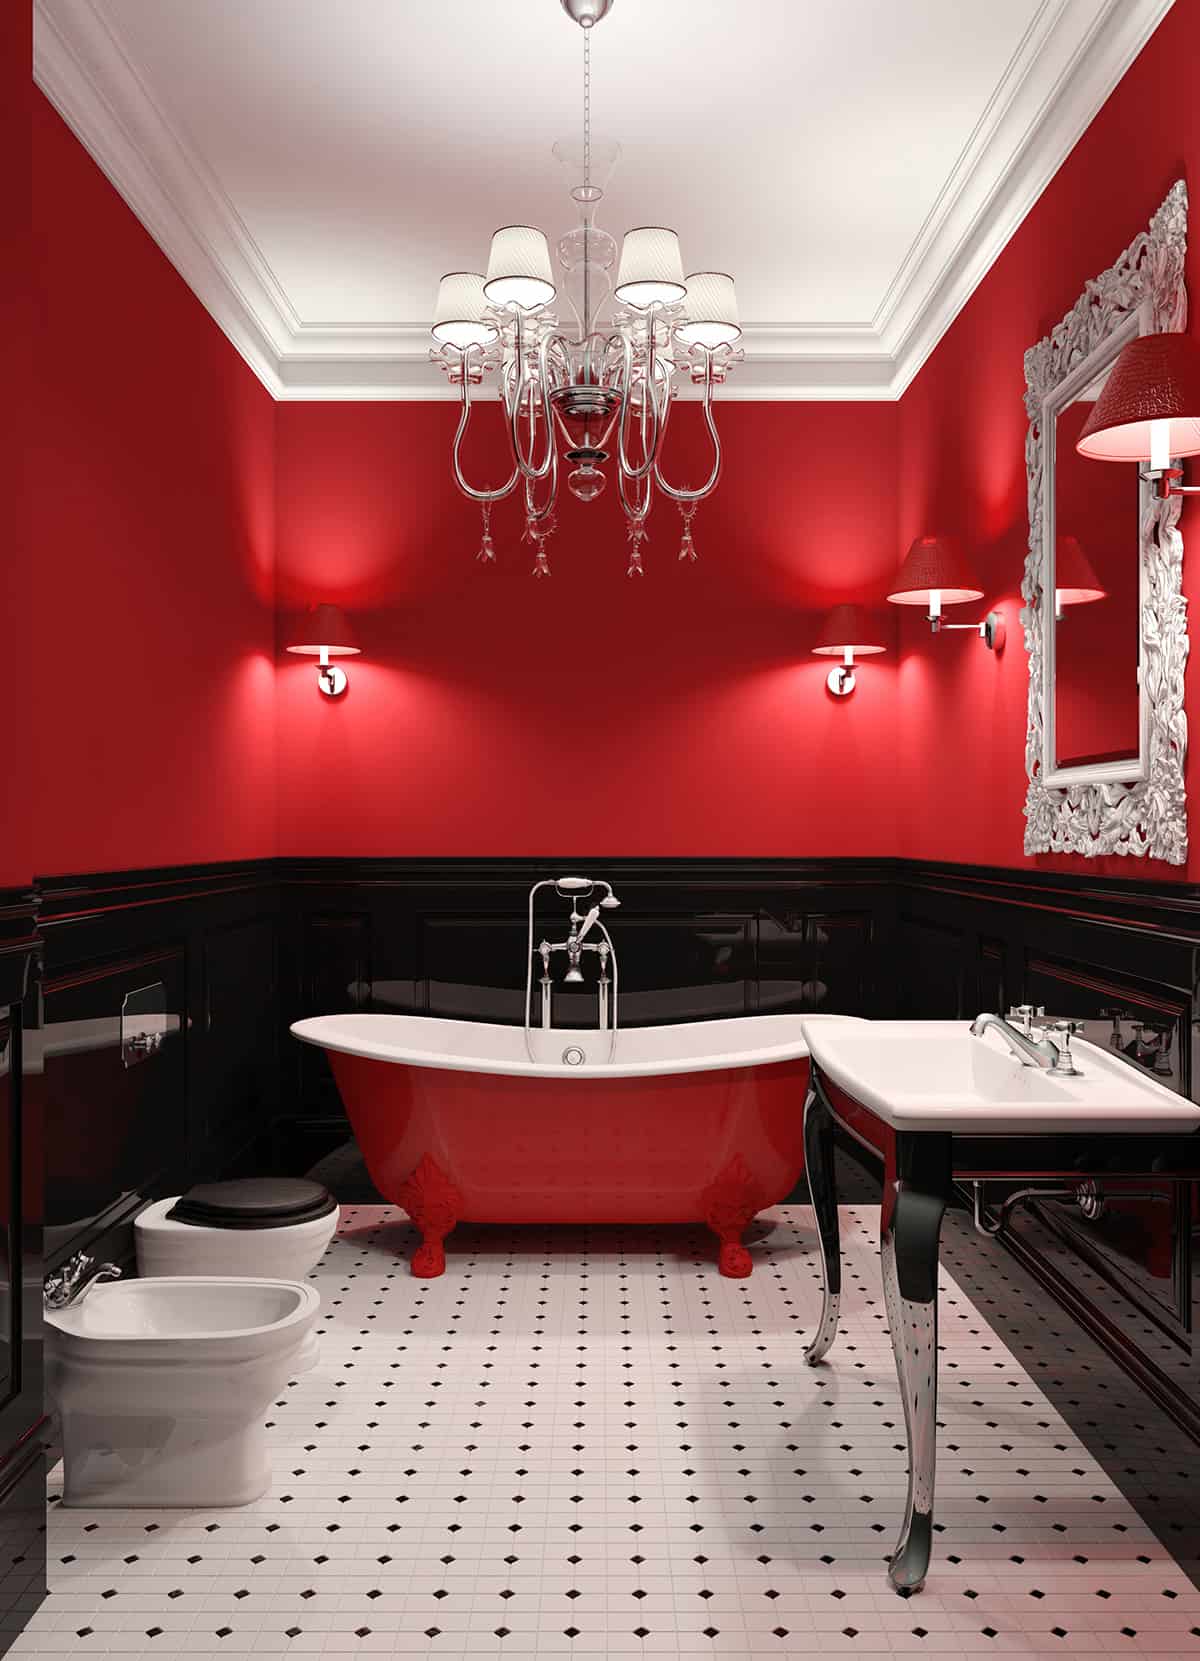 vibrant Red Tile bathroom